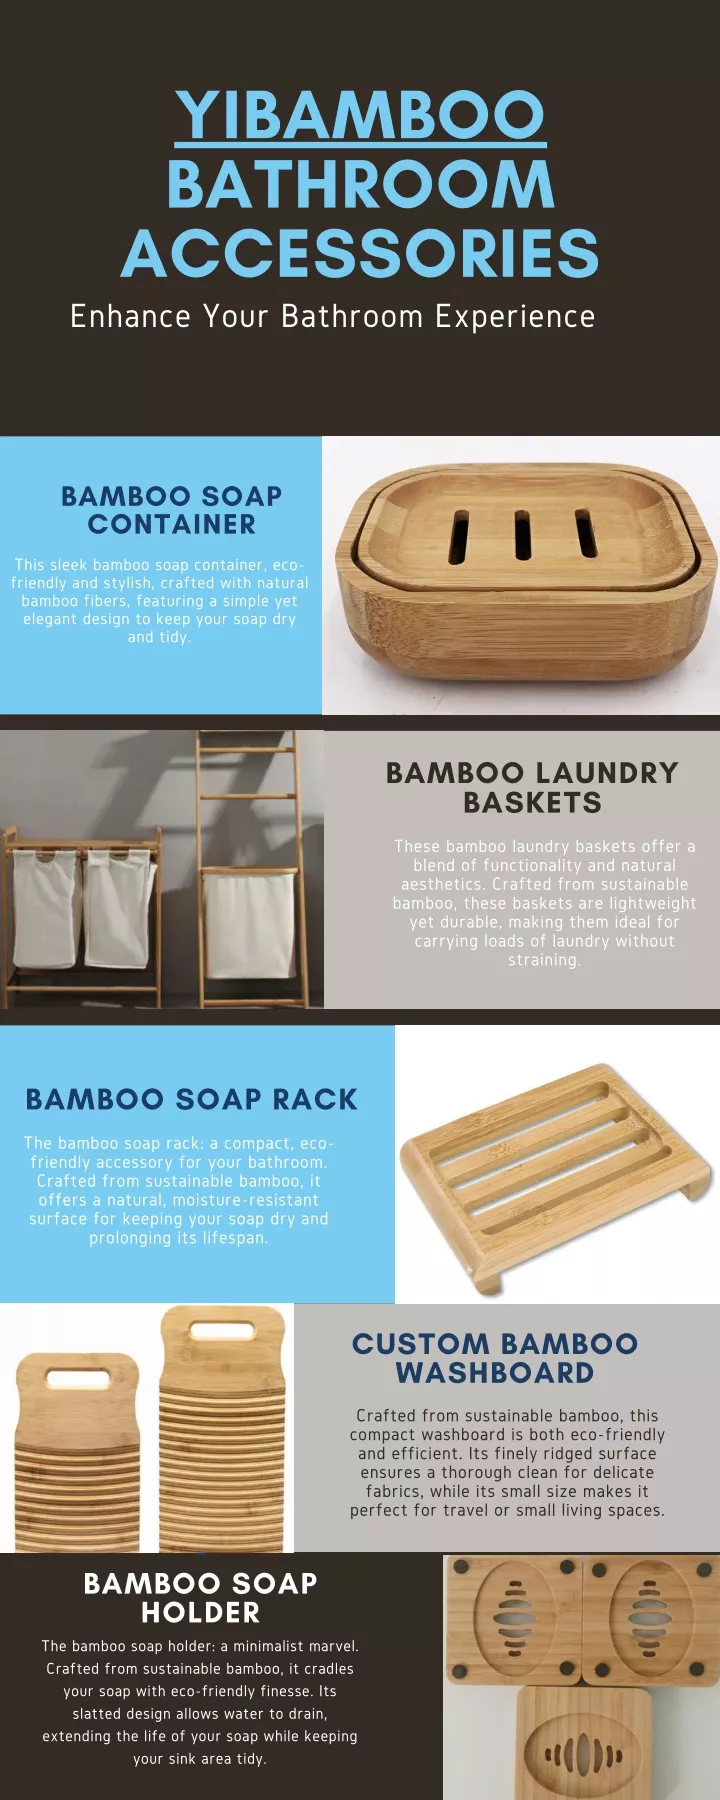 yibamboo bathroom accessories enhance your